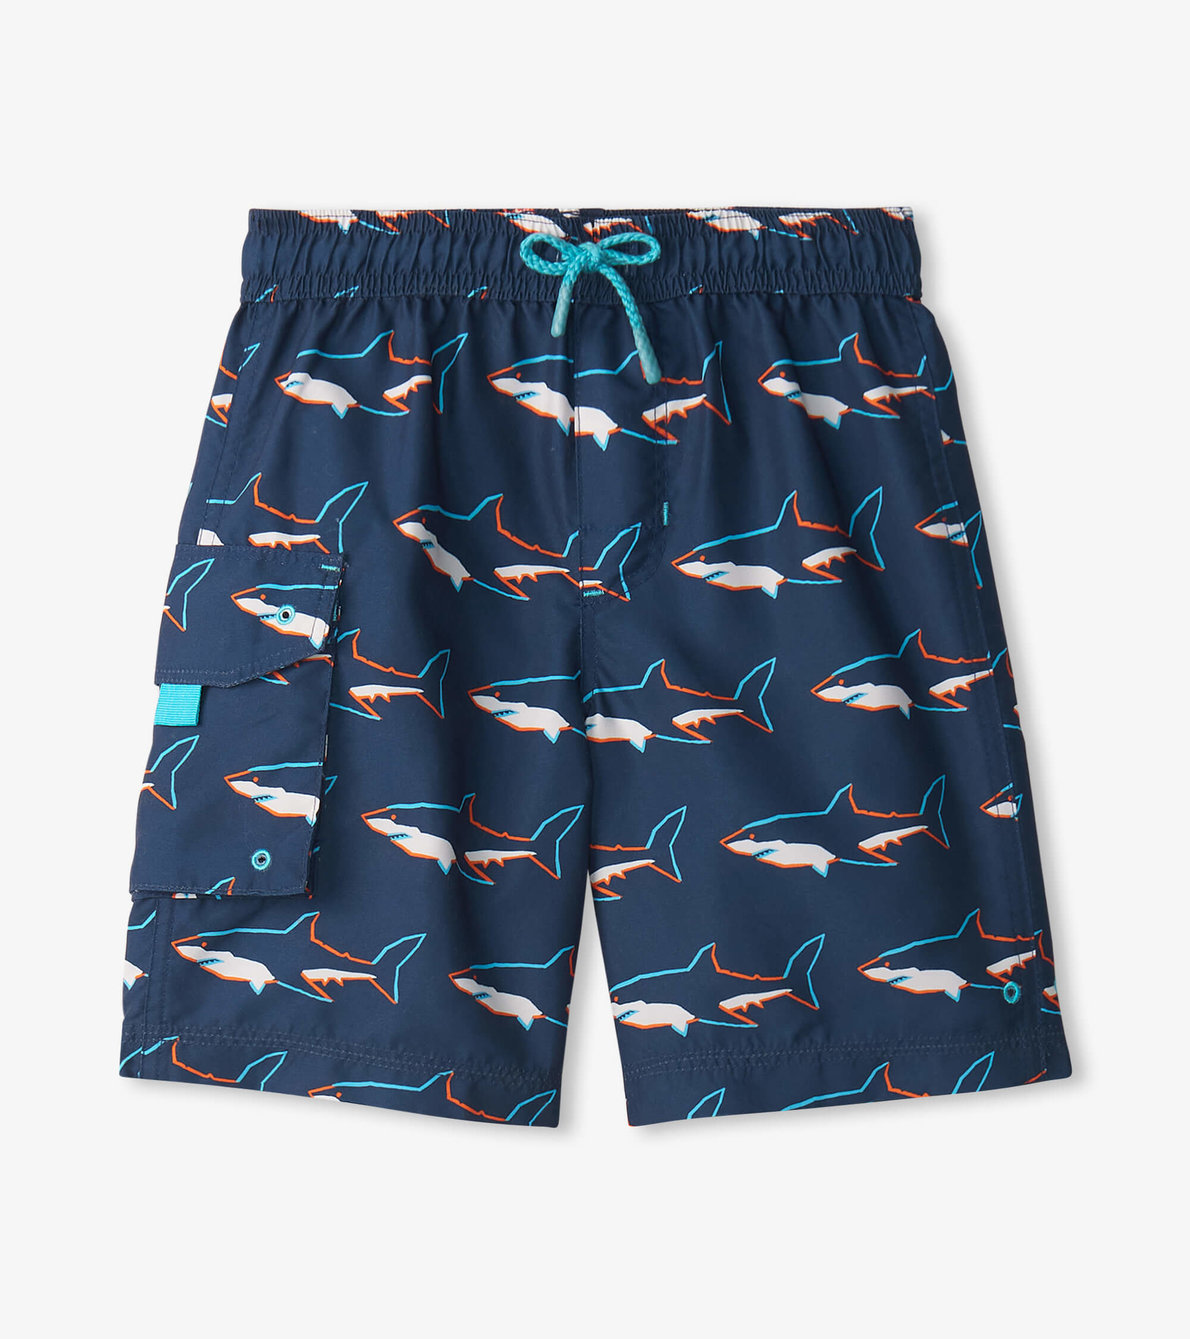 View larger image of Boys Swimming Sharks Board Shorts